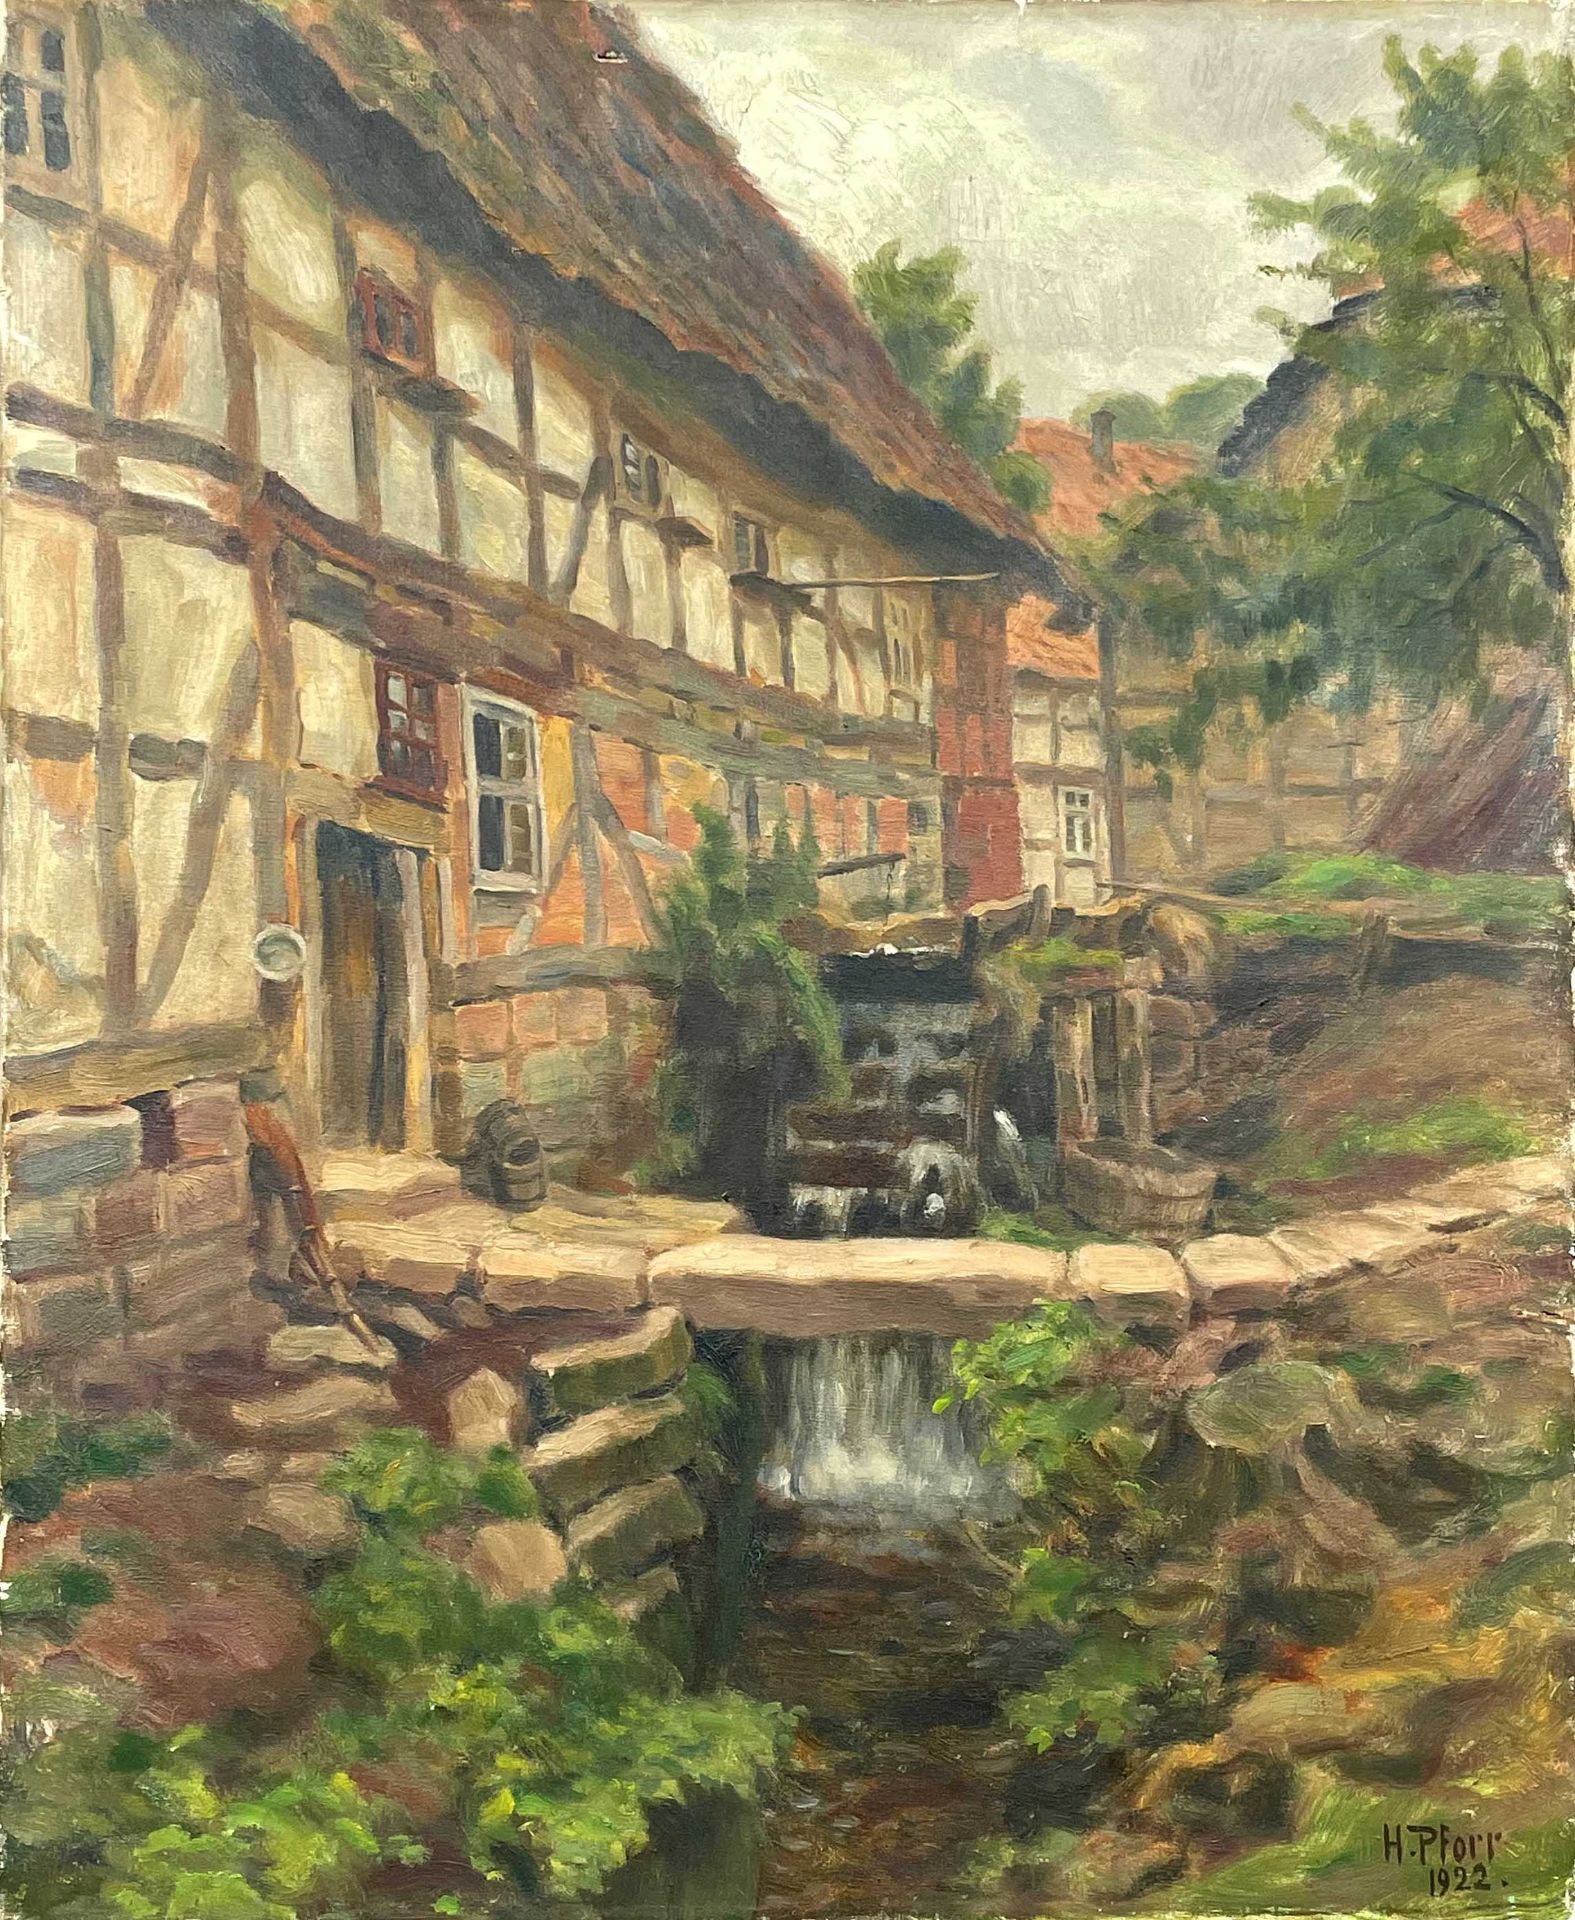 Heinrich PFORR (1880 - 1970). Mühle am Hasselbach. Datiert 1922.